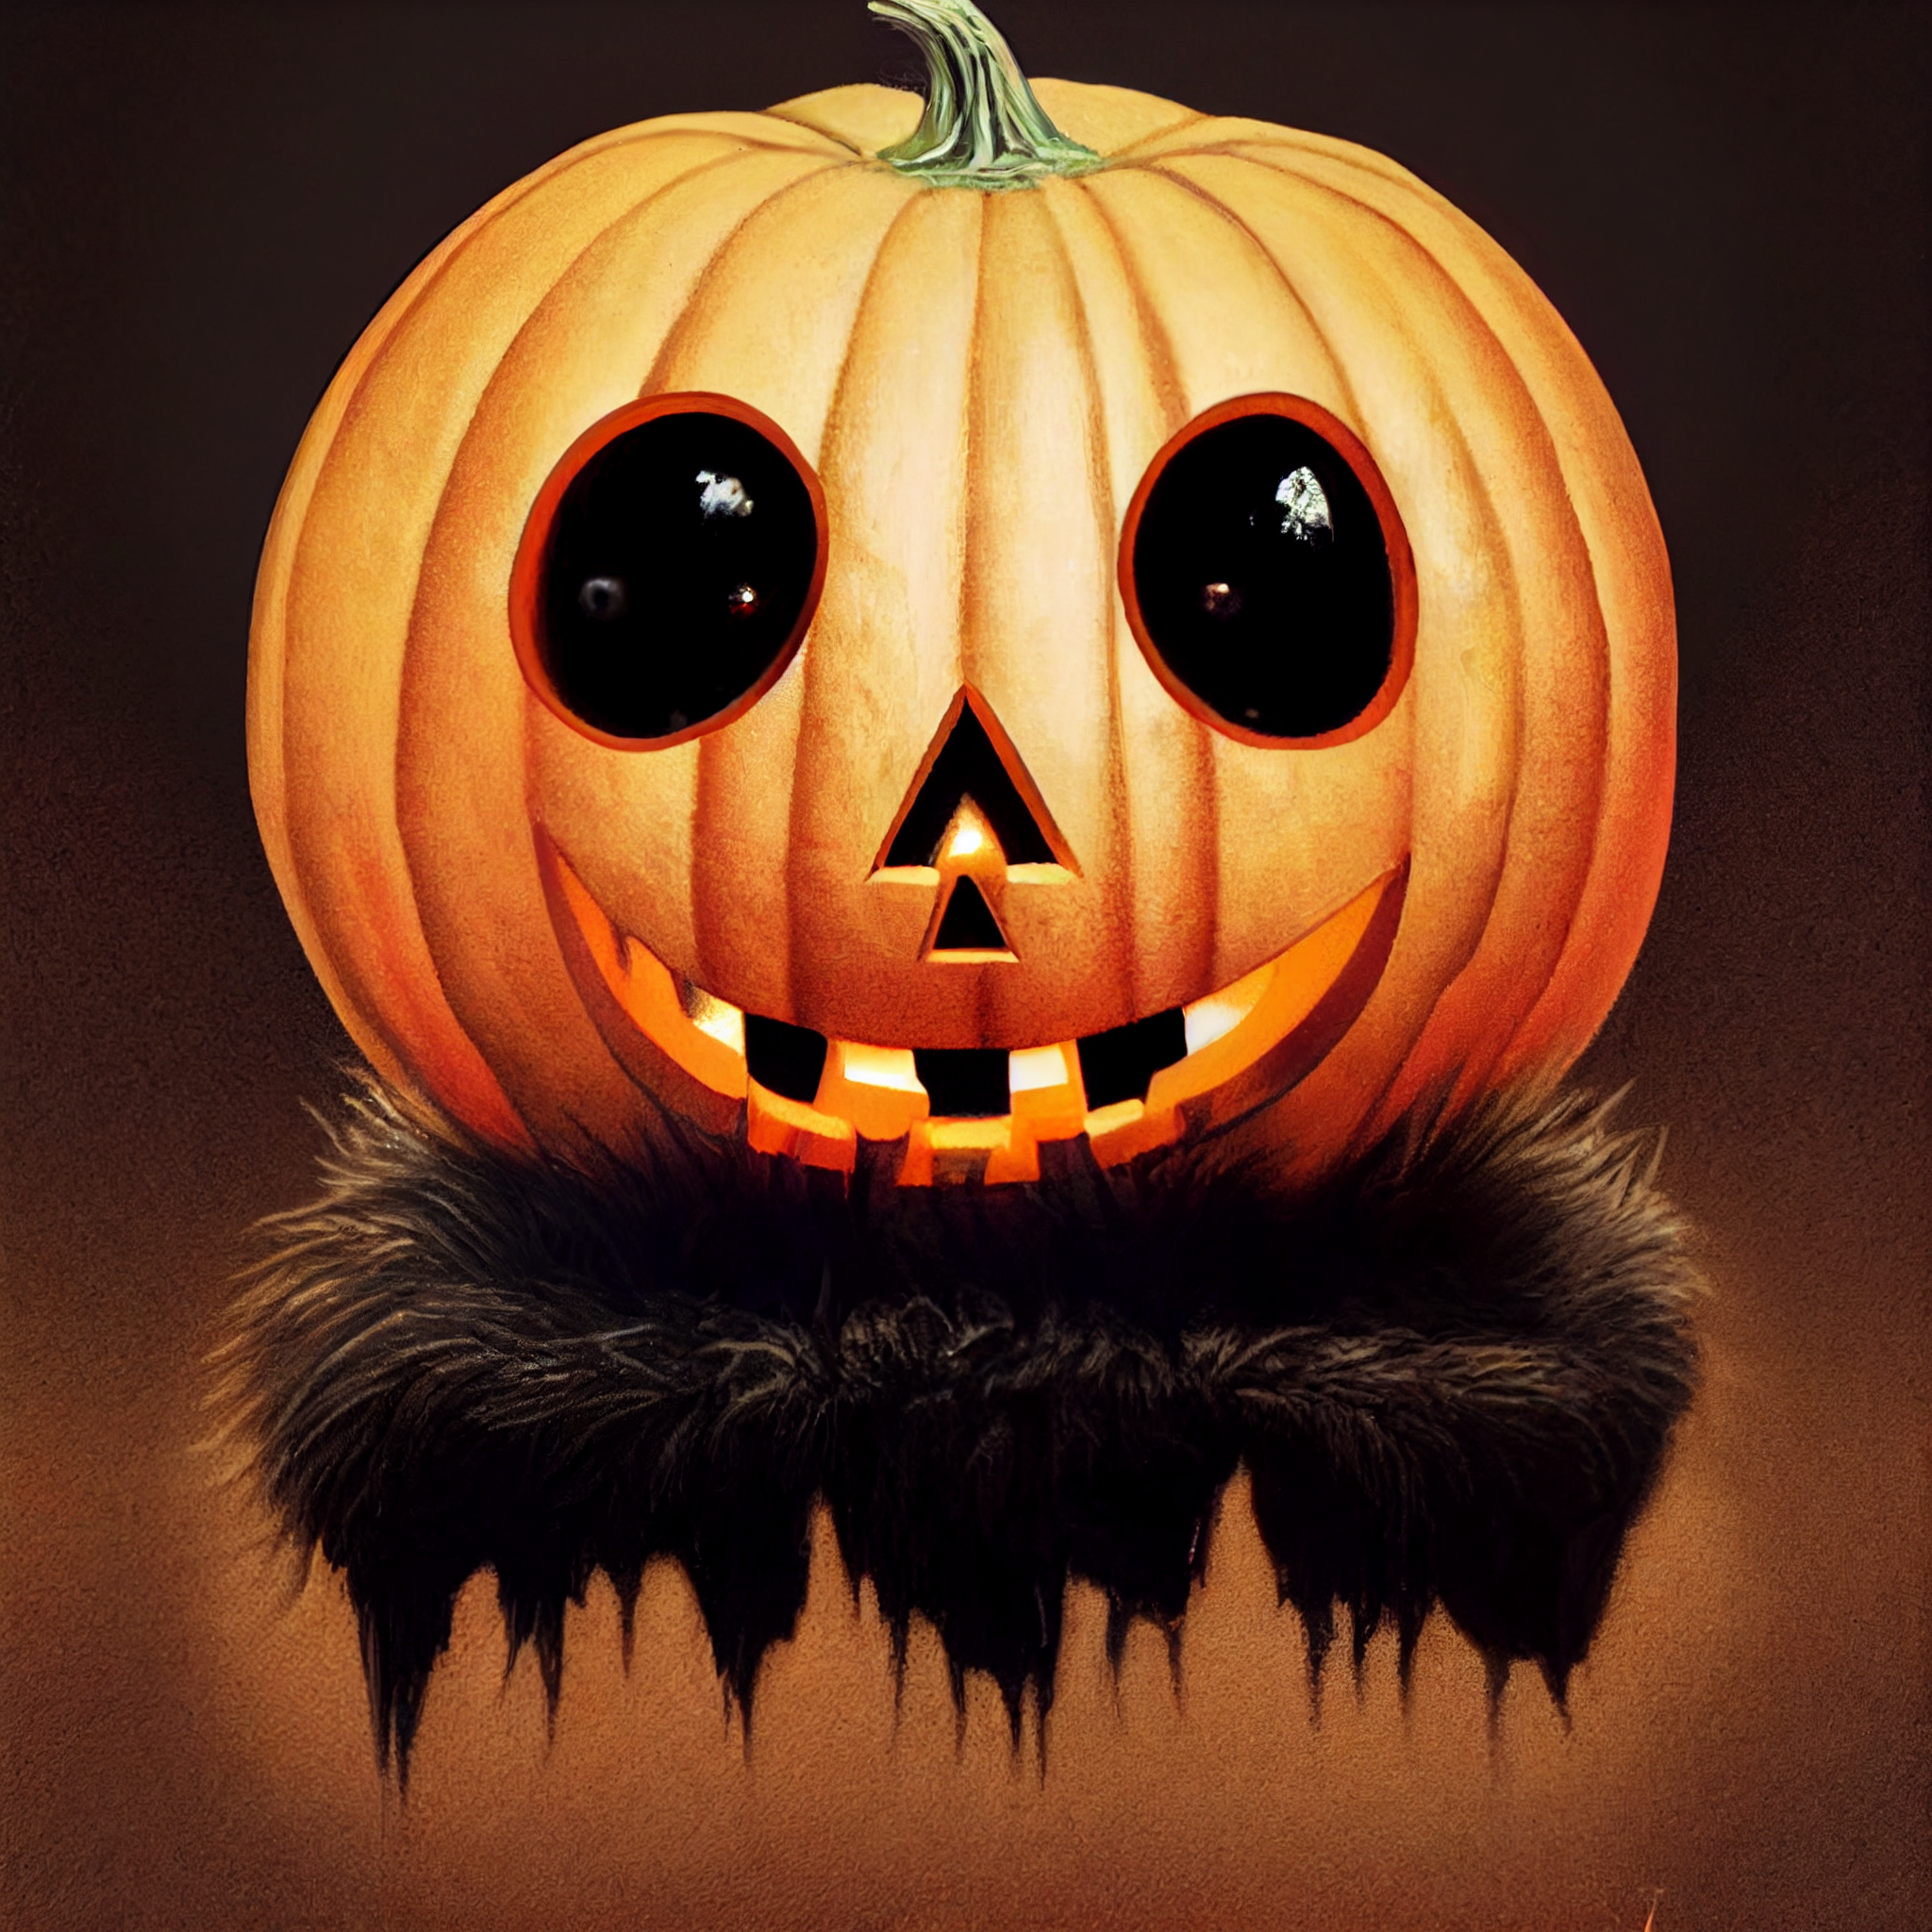 midjourney/bbbbbbbbrie_fluffy_black_pumpkin_halloween_cute_upscaled02.png